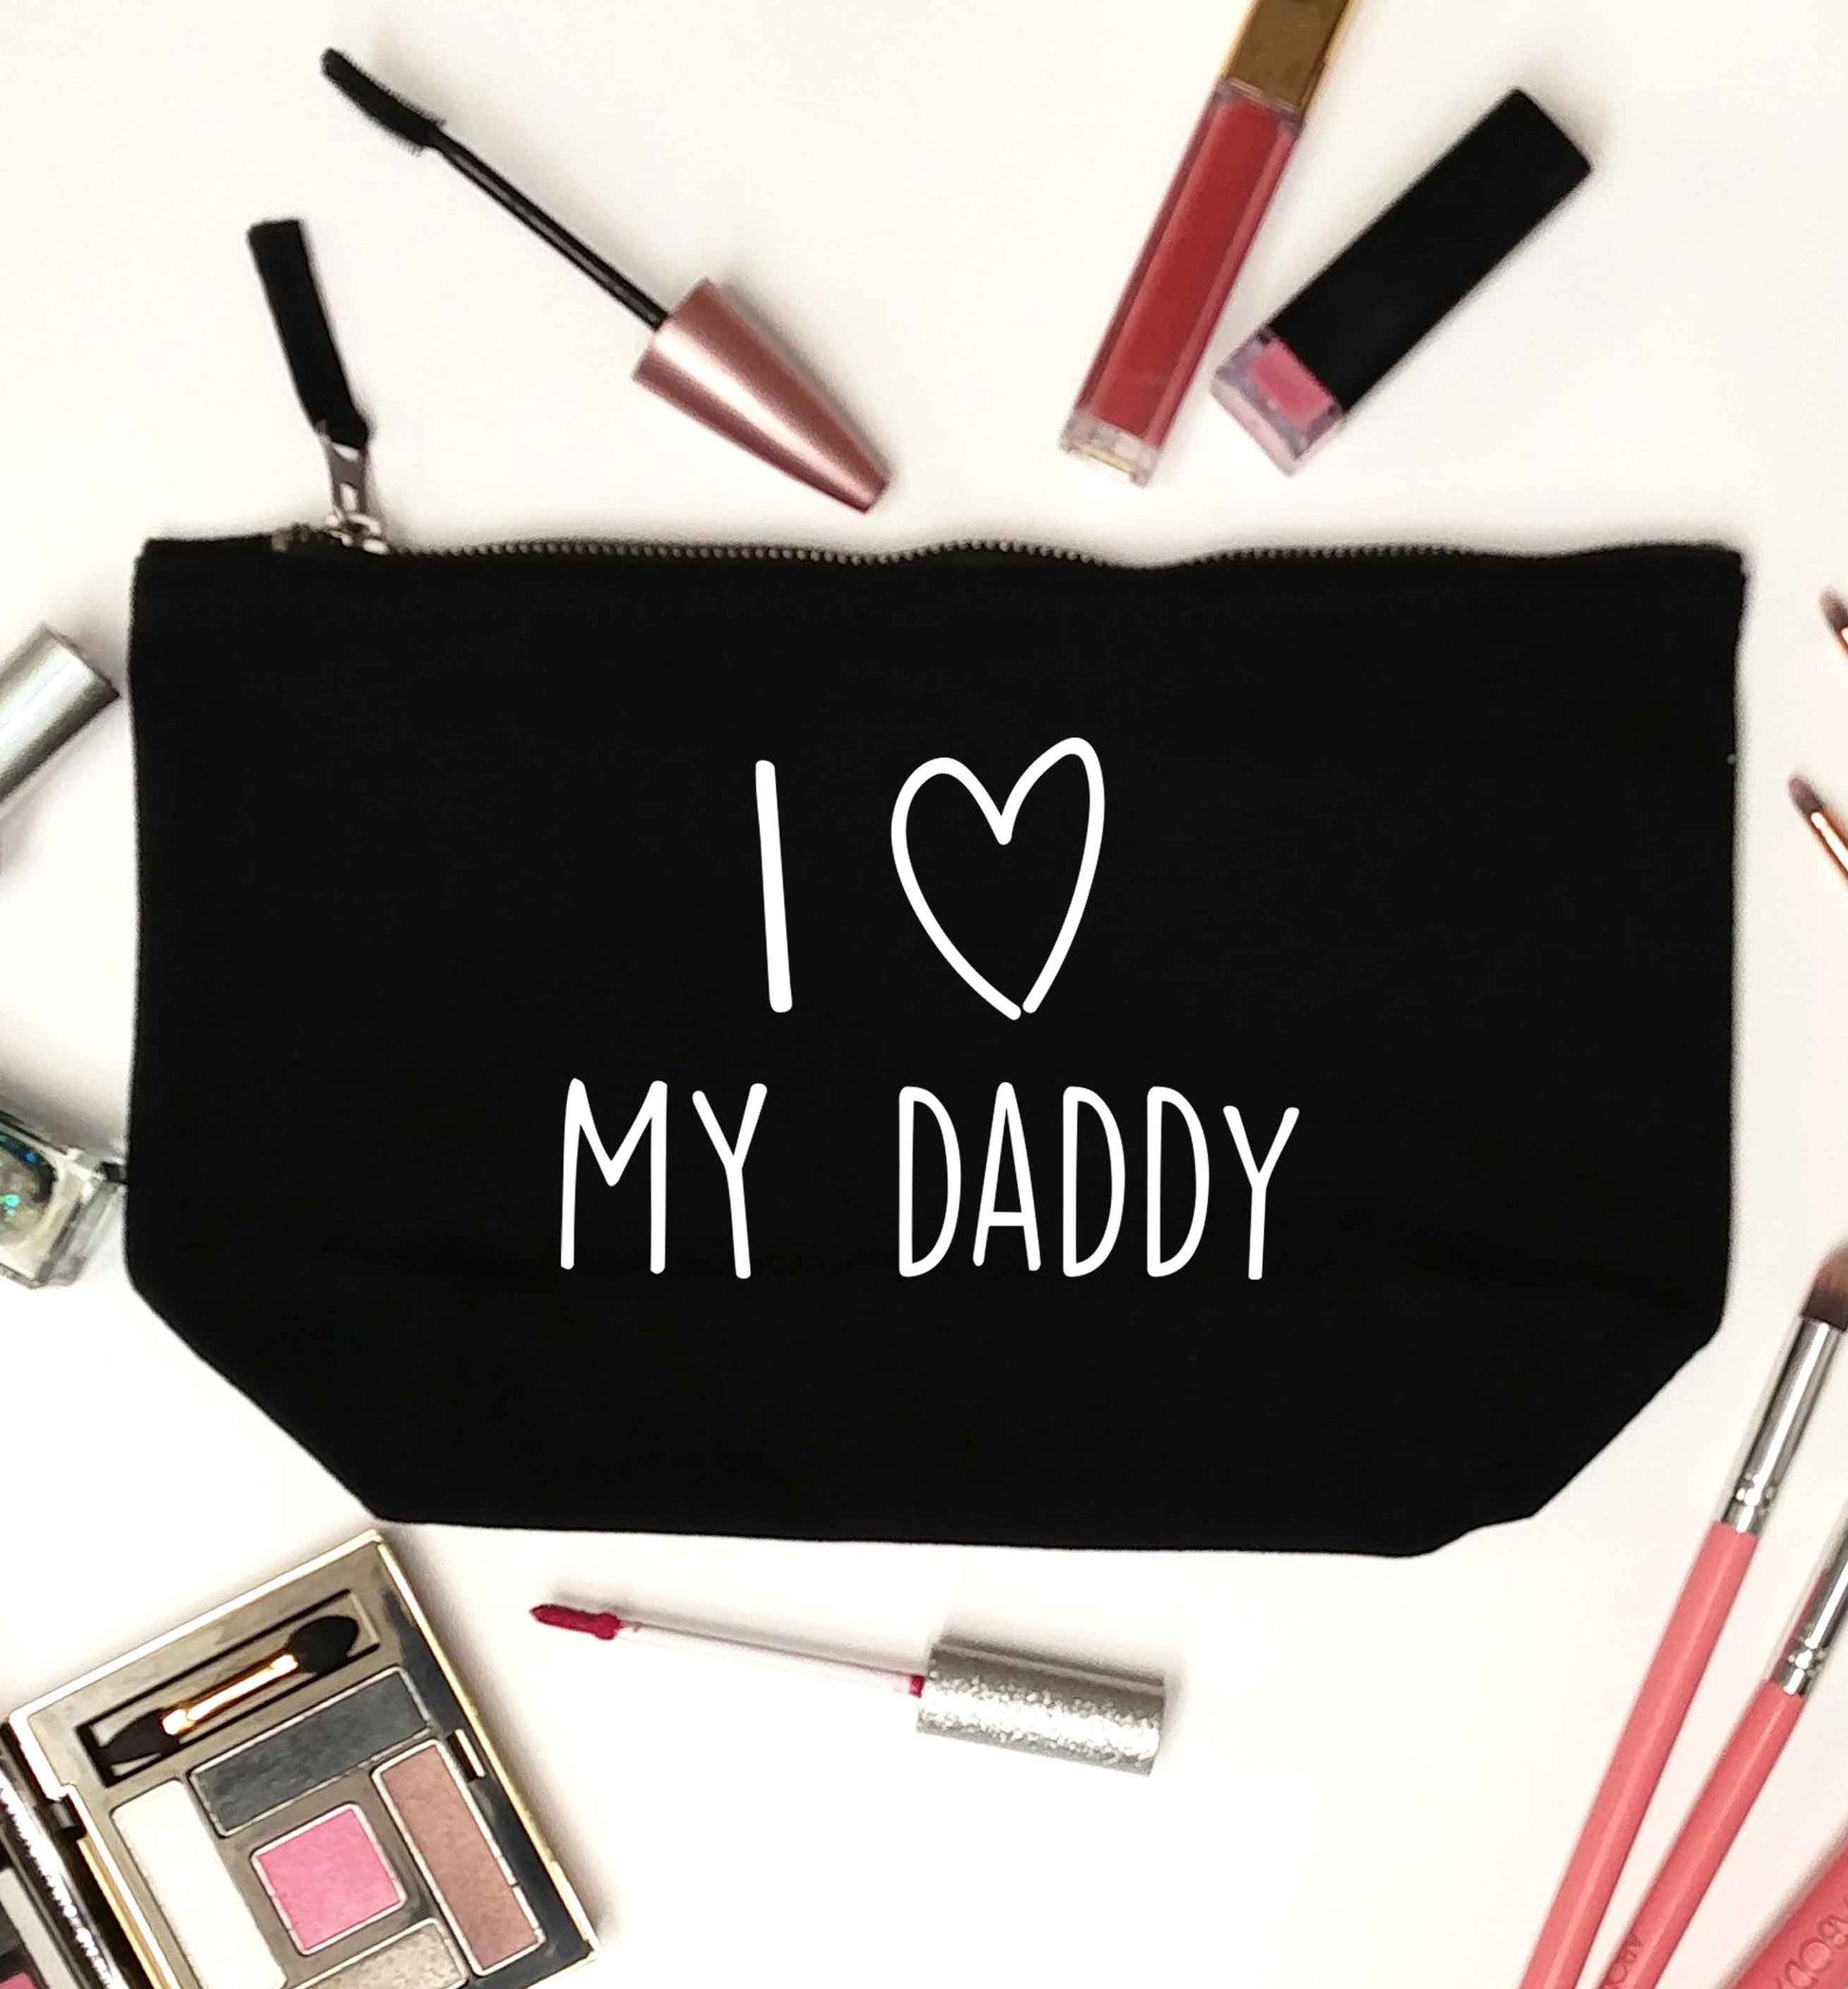 I love my daddy black makeup bag